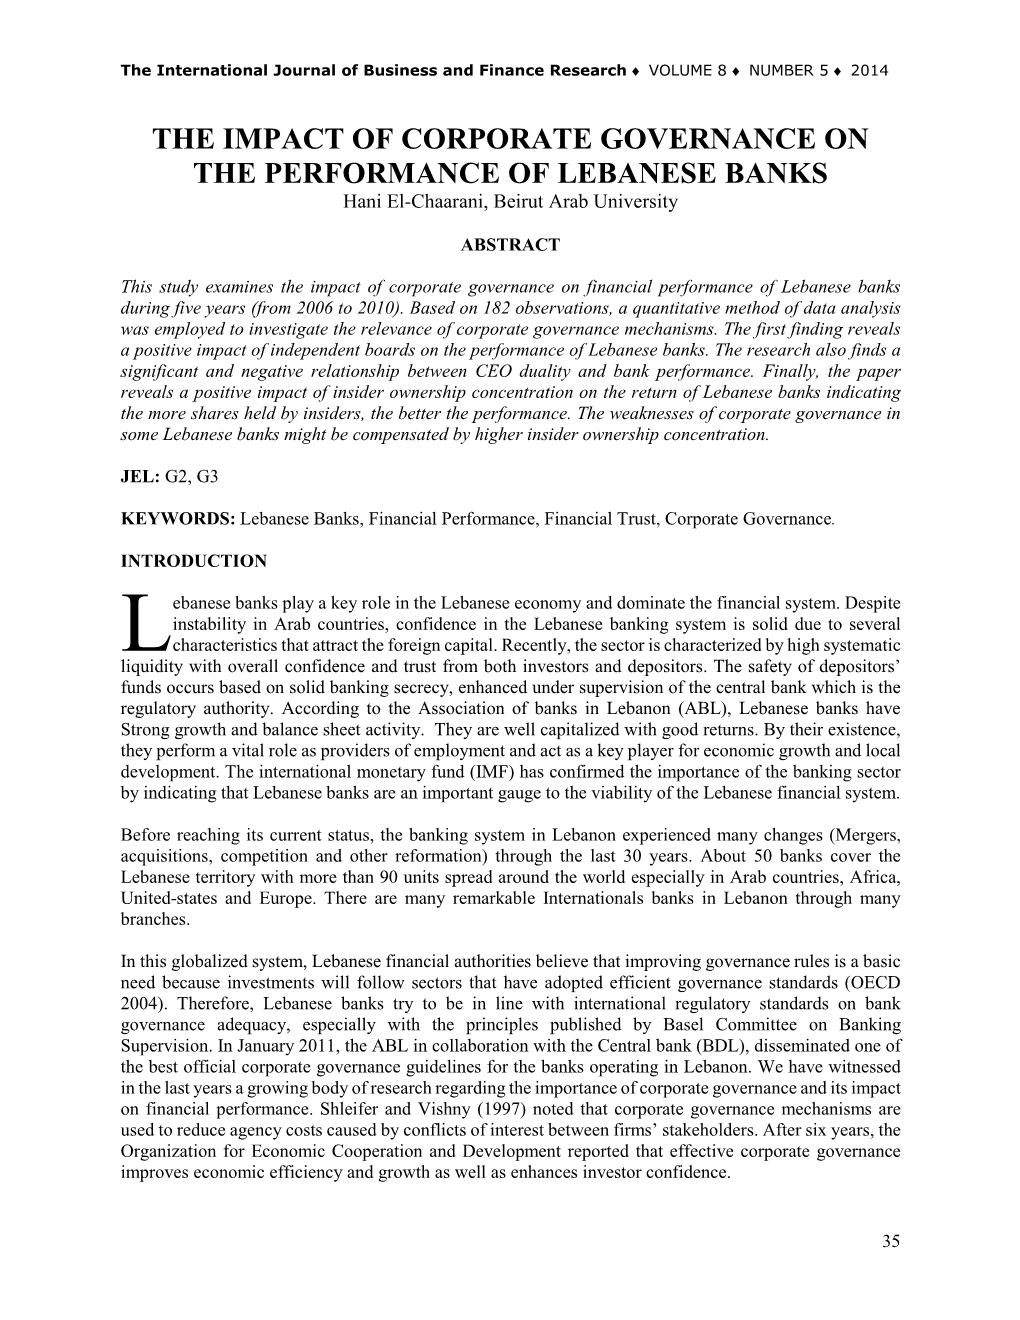 THE IMPACT of CORPORATE GOVERNANCE on the PERFORMANCE of LEBANESE BANKS Hani El-Chaarani, Beirut Arab University